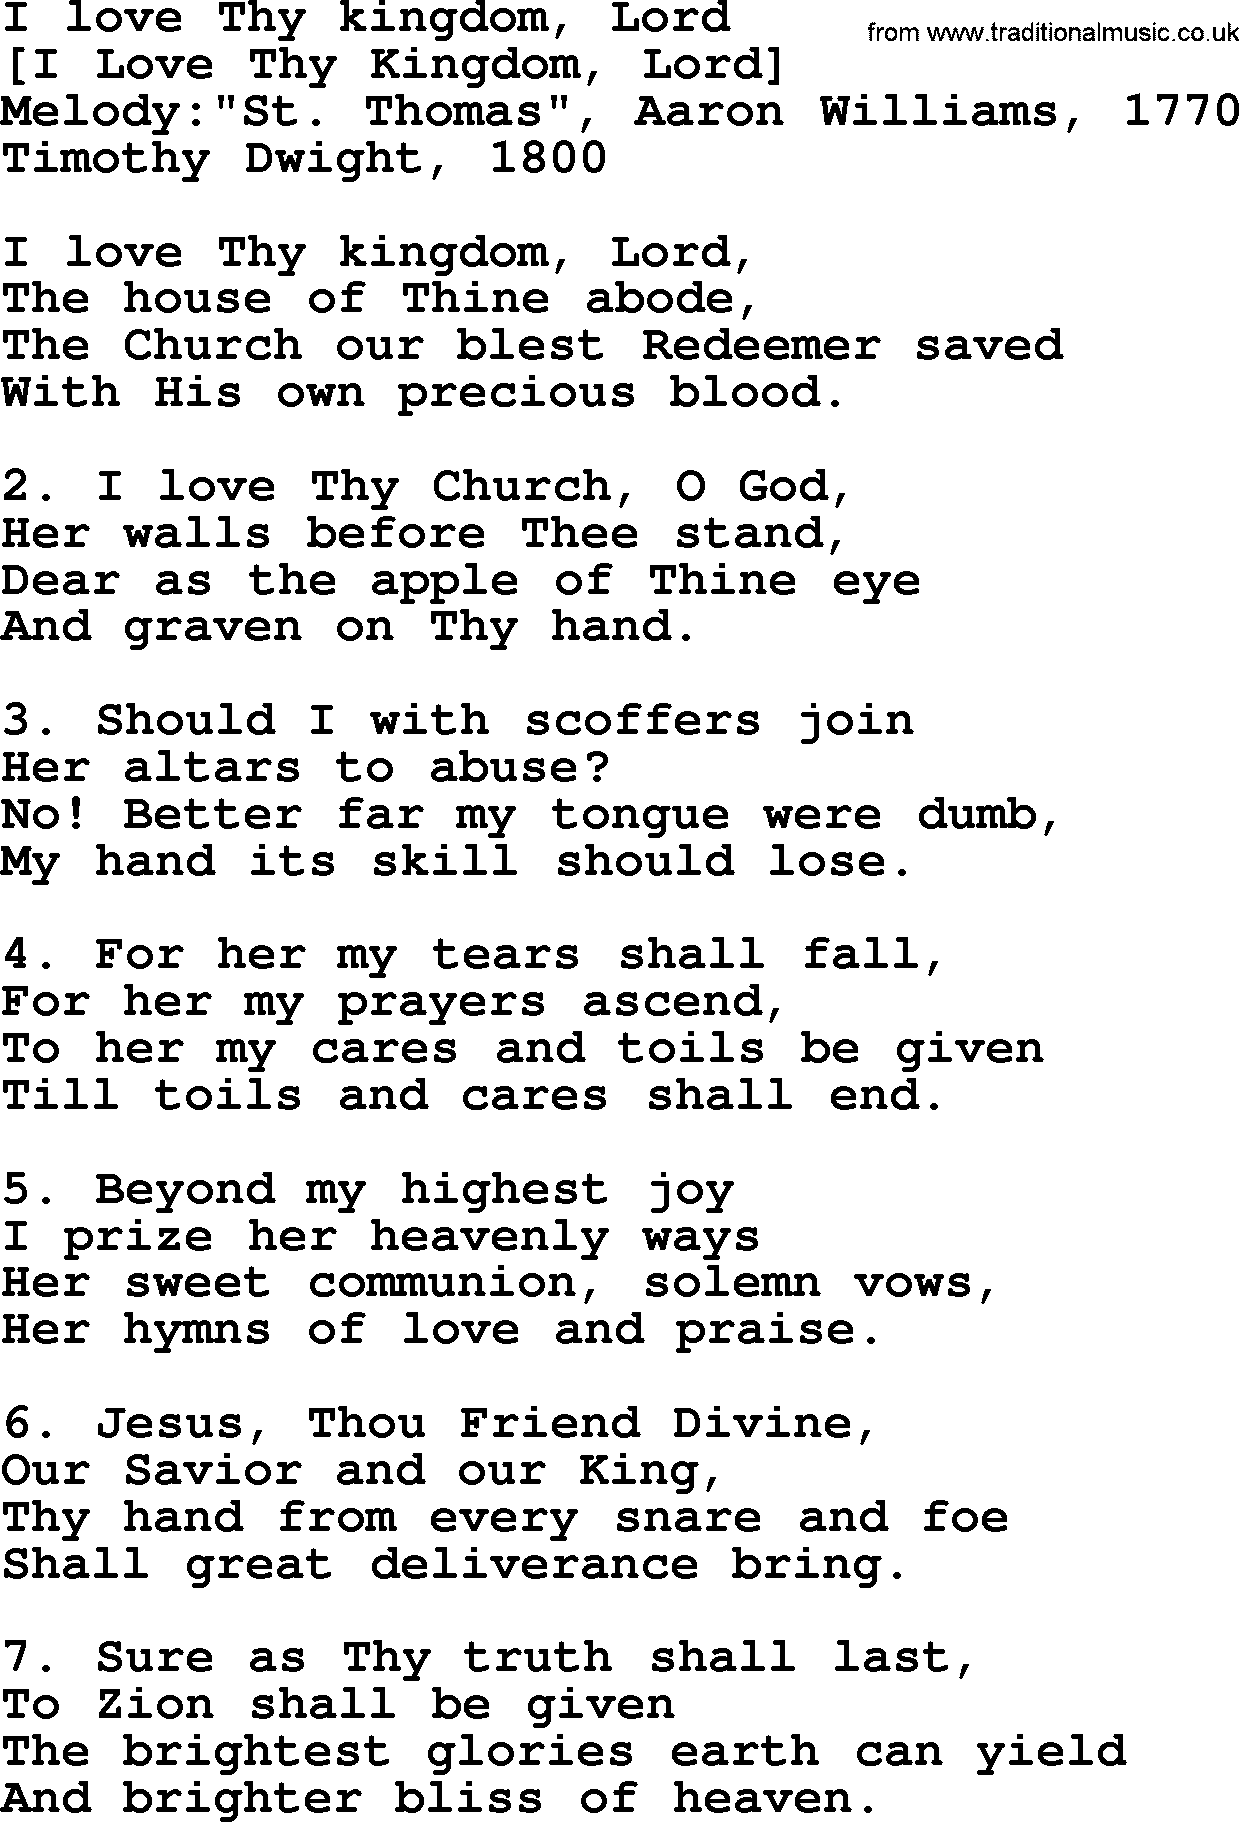 Old American Song: I Love Thy Kingdom, Lord, lyrics